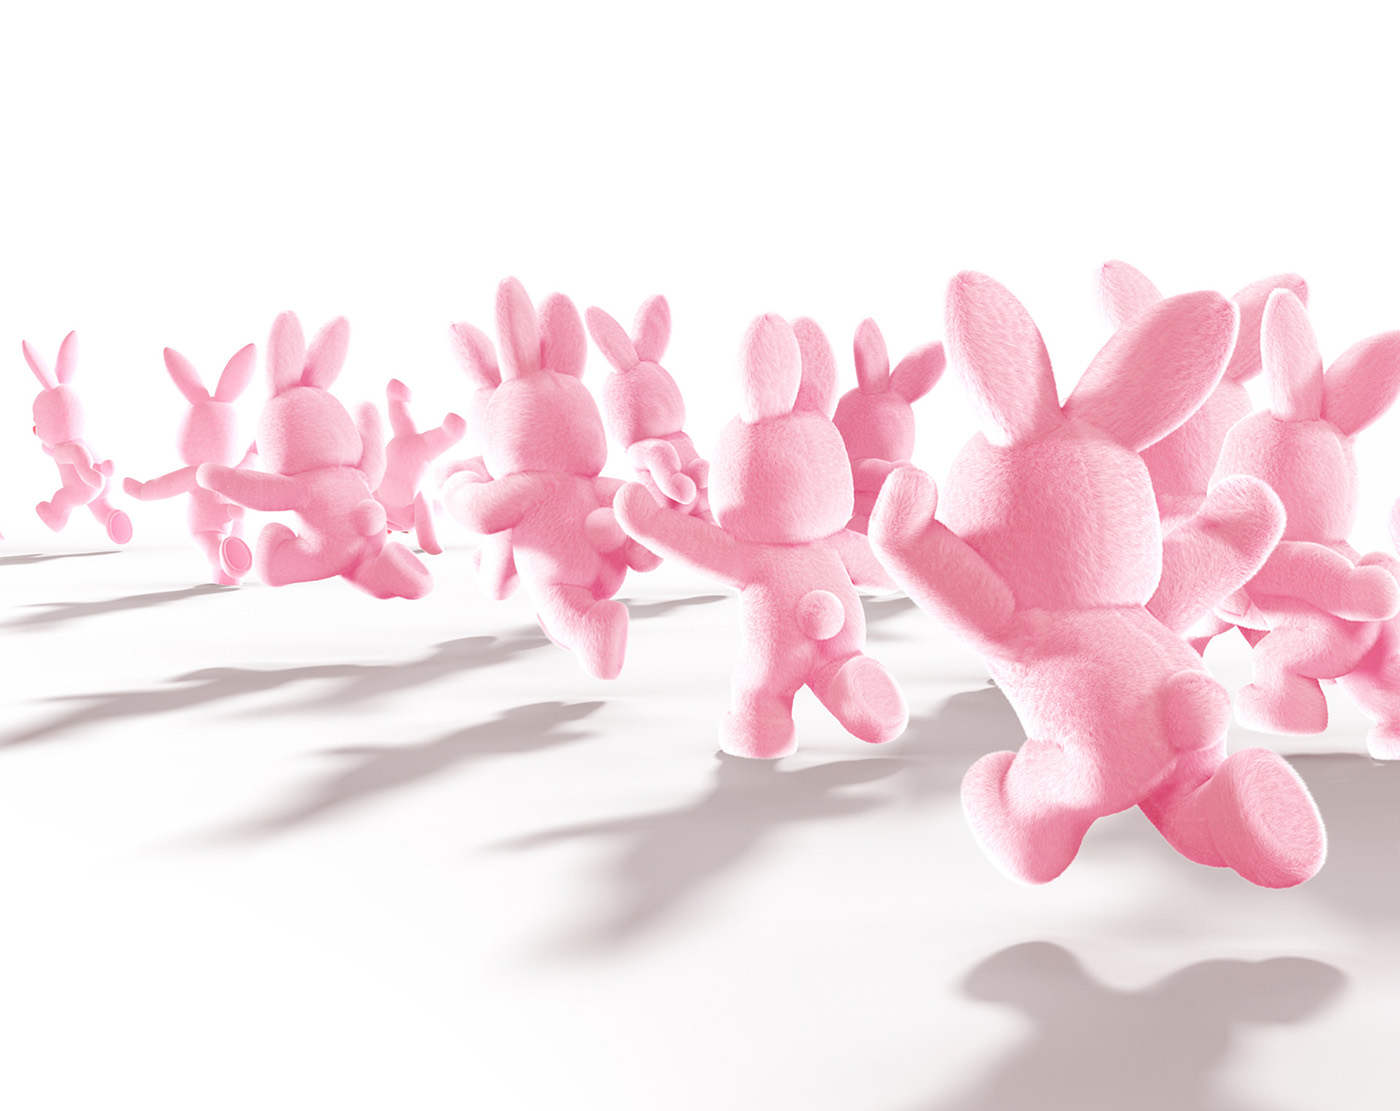 Adobe Portfolio DURACELL rabbits 3D print CGI cgi illustration digital illustration Hong Kong asia